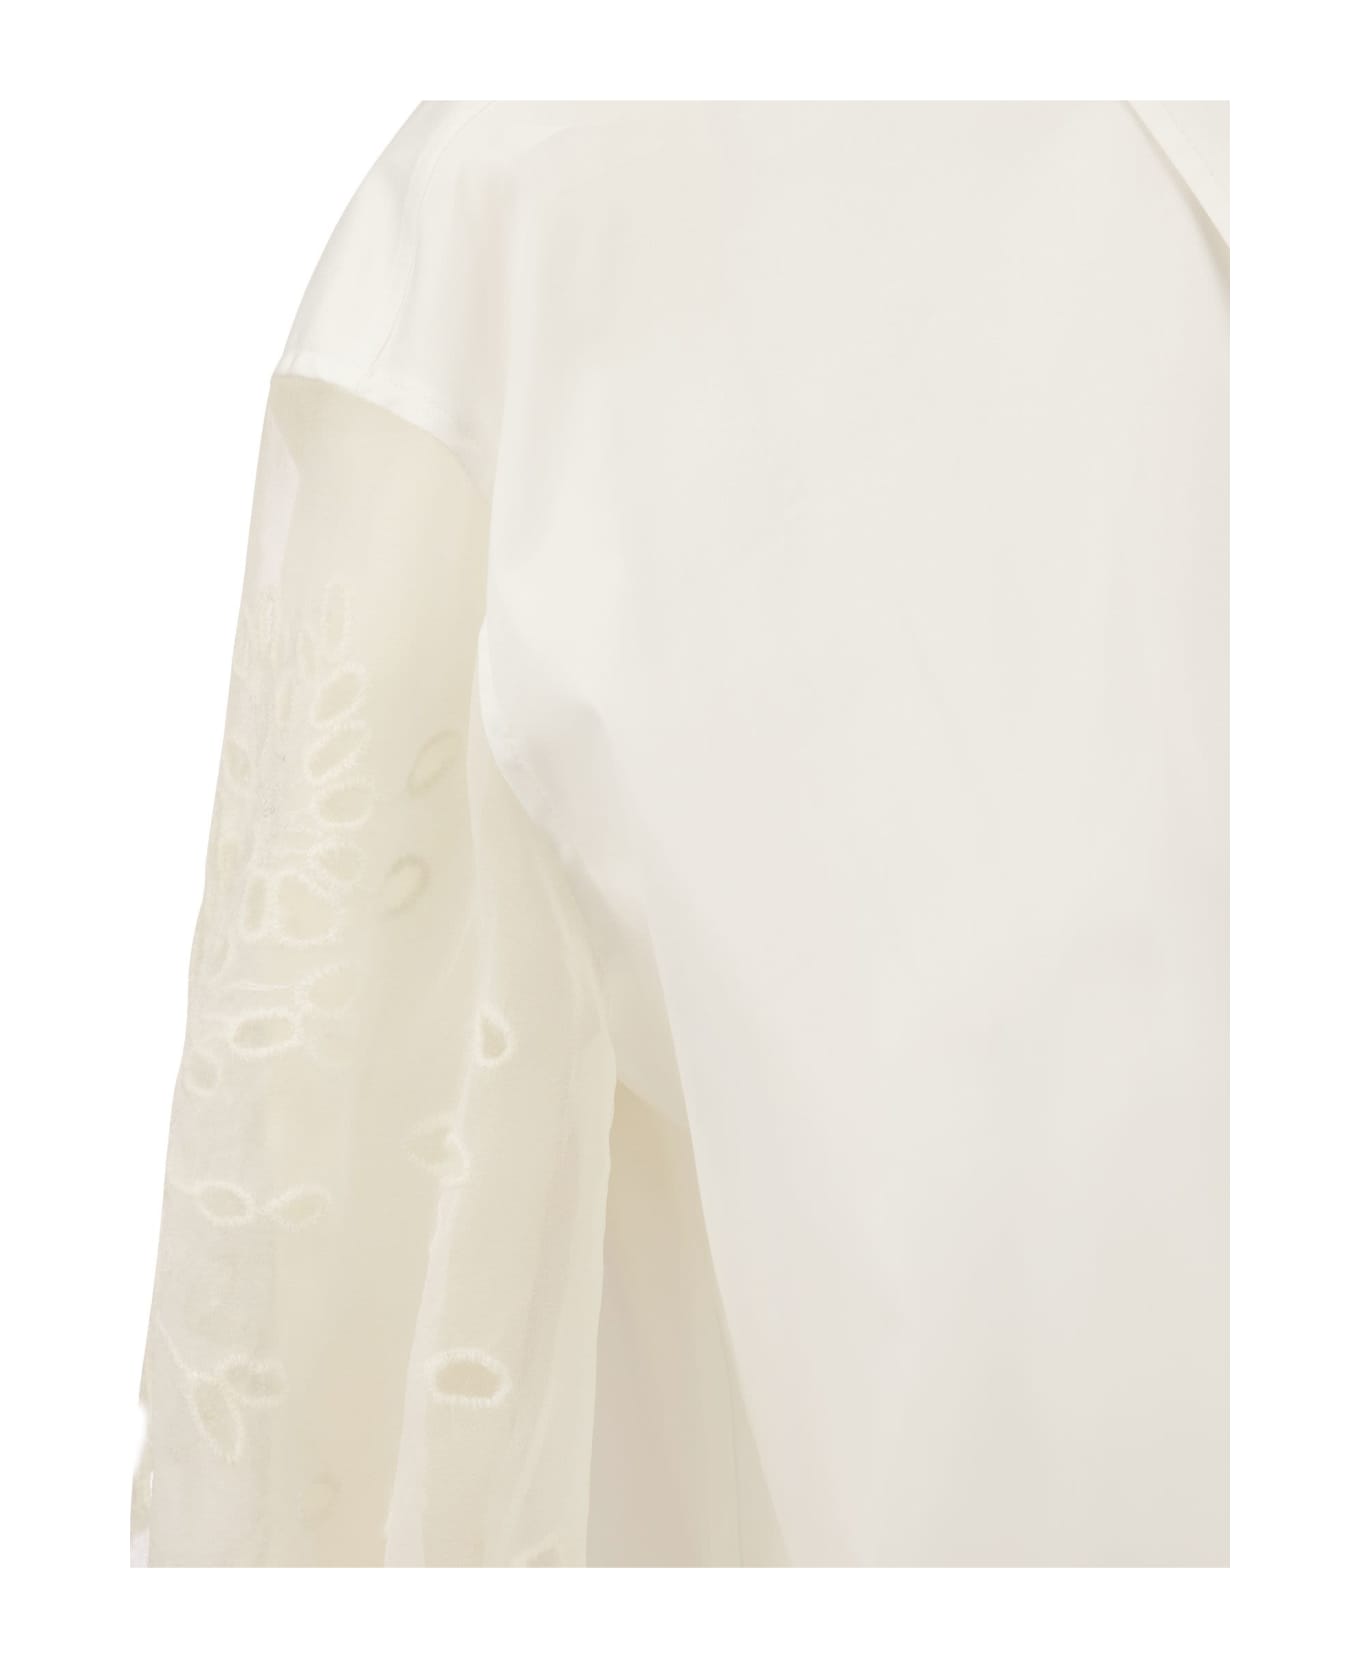 Brunello Cucinelli Stretch Cotton Poplin Shirt With Crispy Silk Broderie Anglaise Sleeve - White